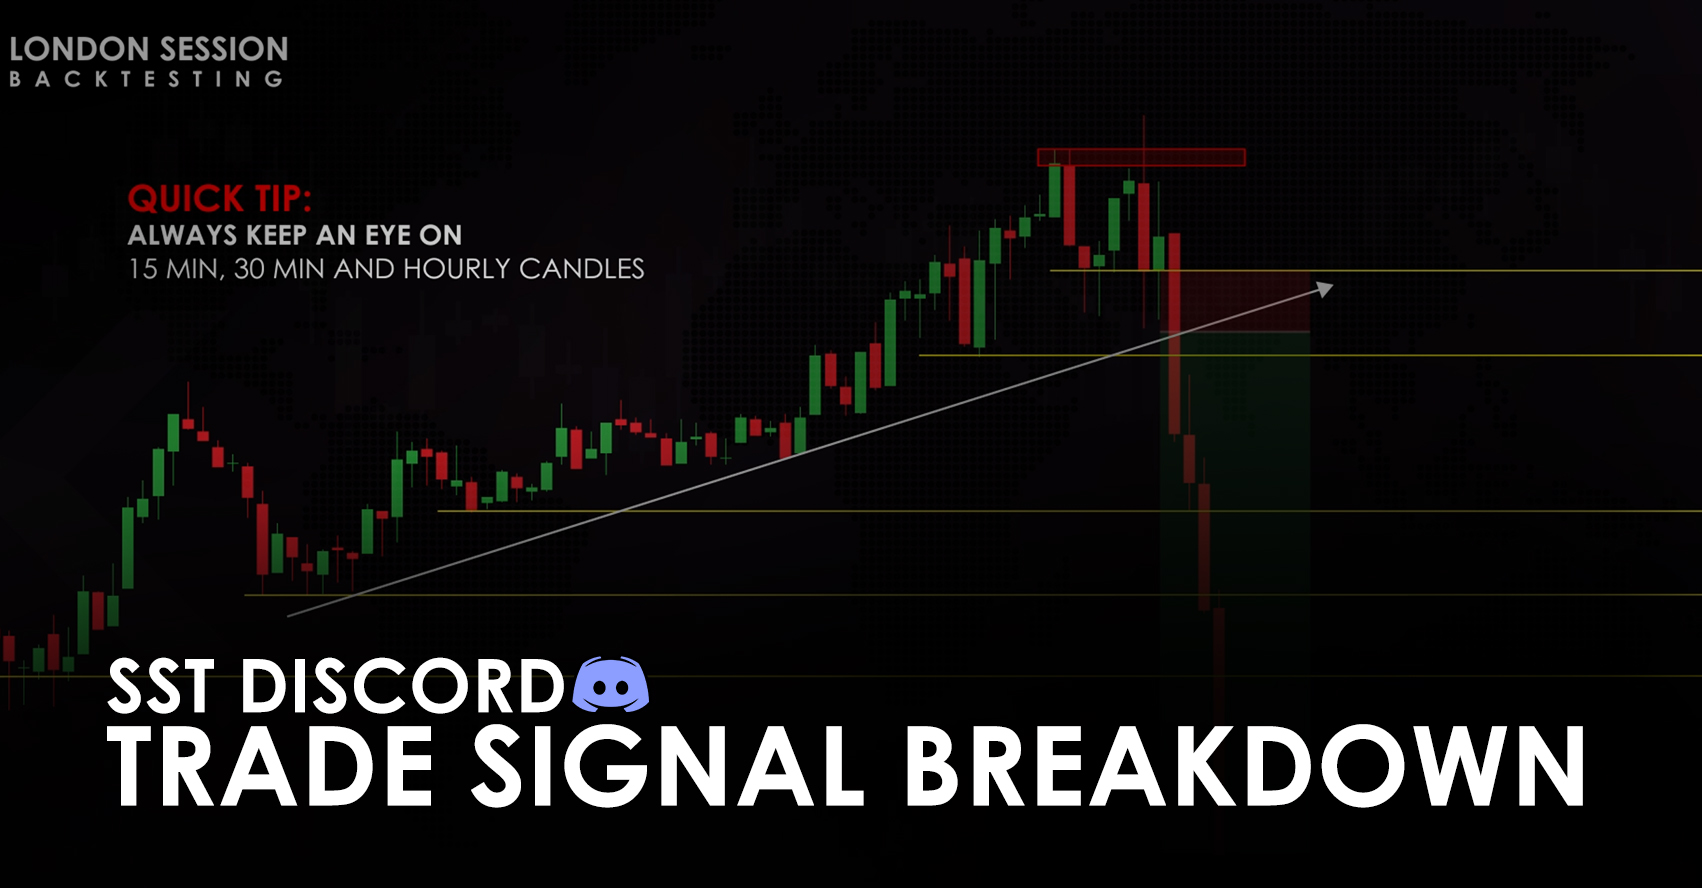 SST Discord Trade Signal Breakdown